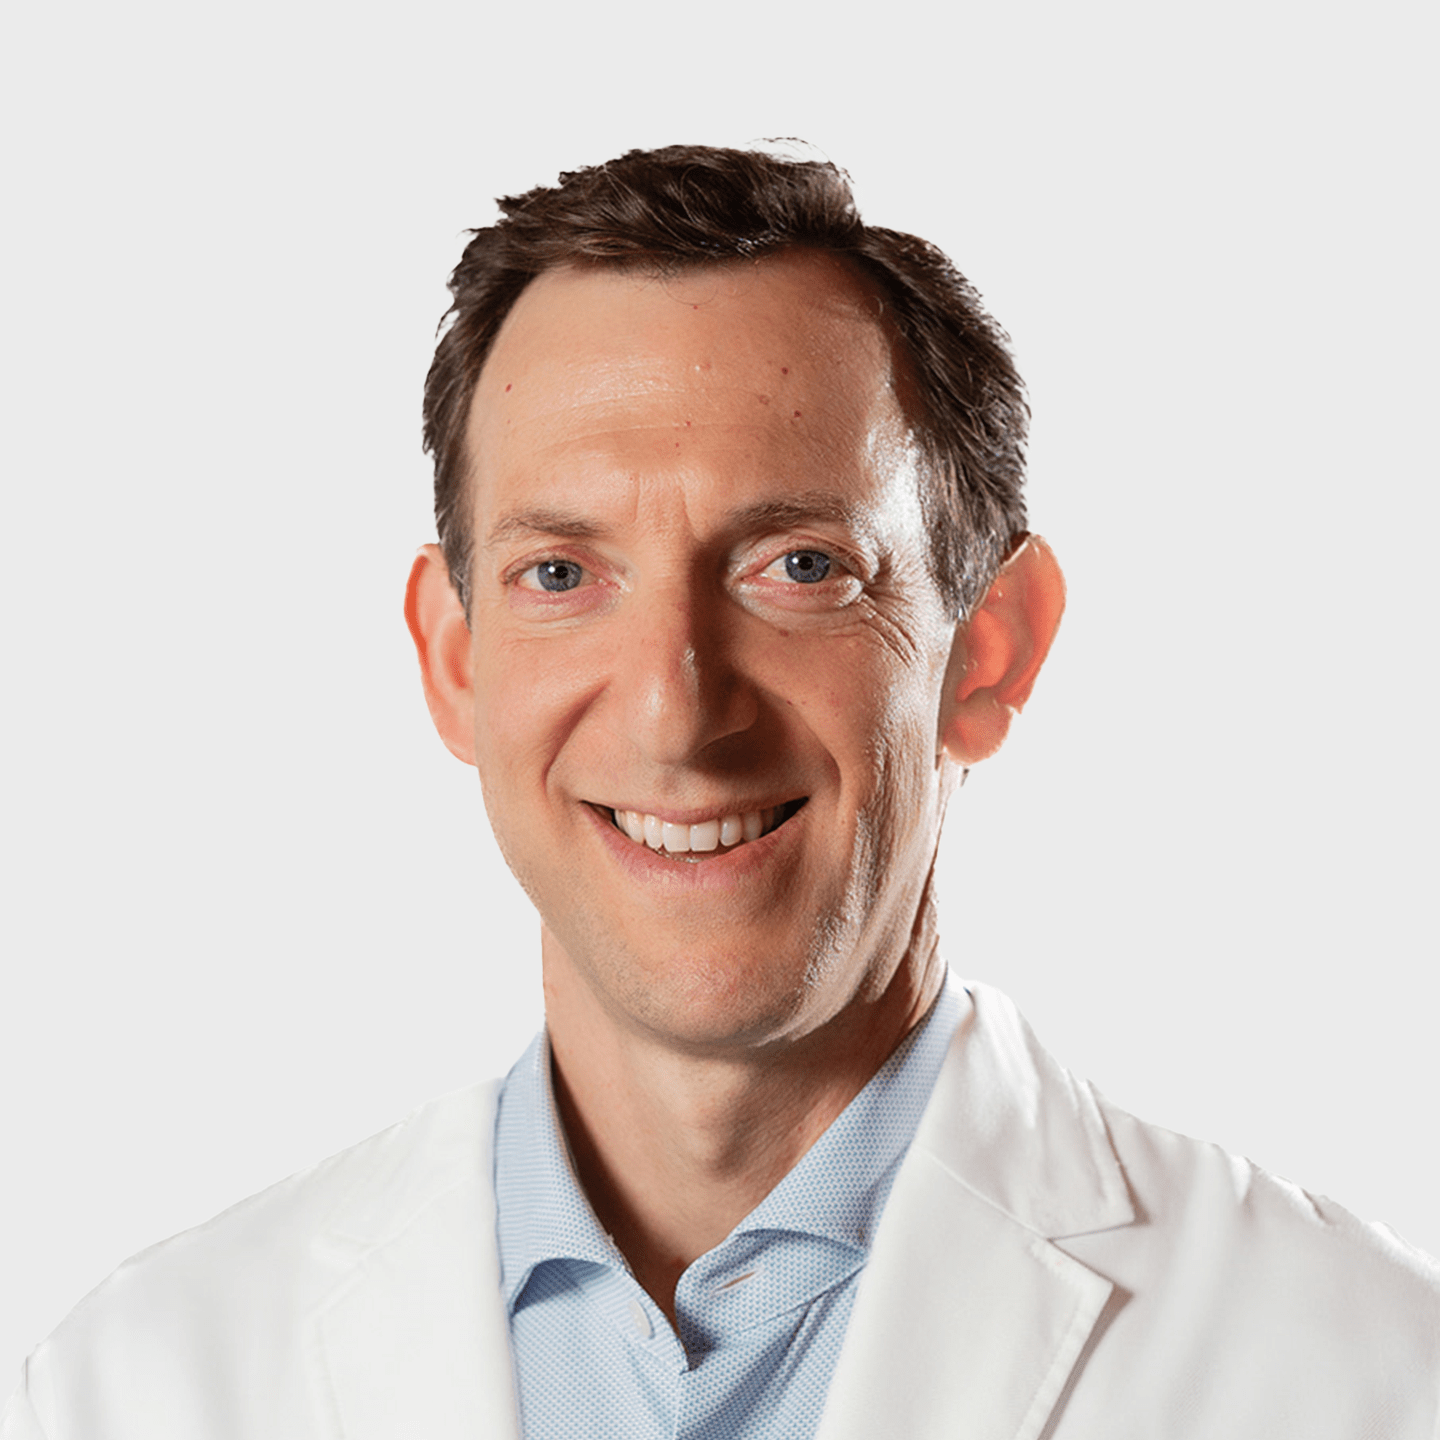 Orthobiologics Q&A with Dr. David Hergan